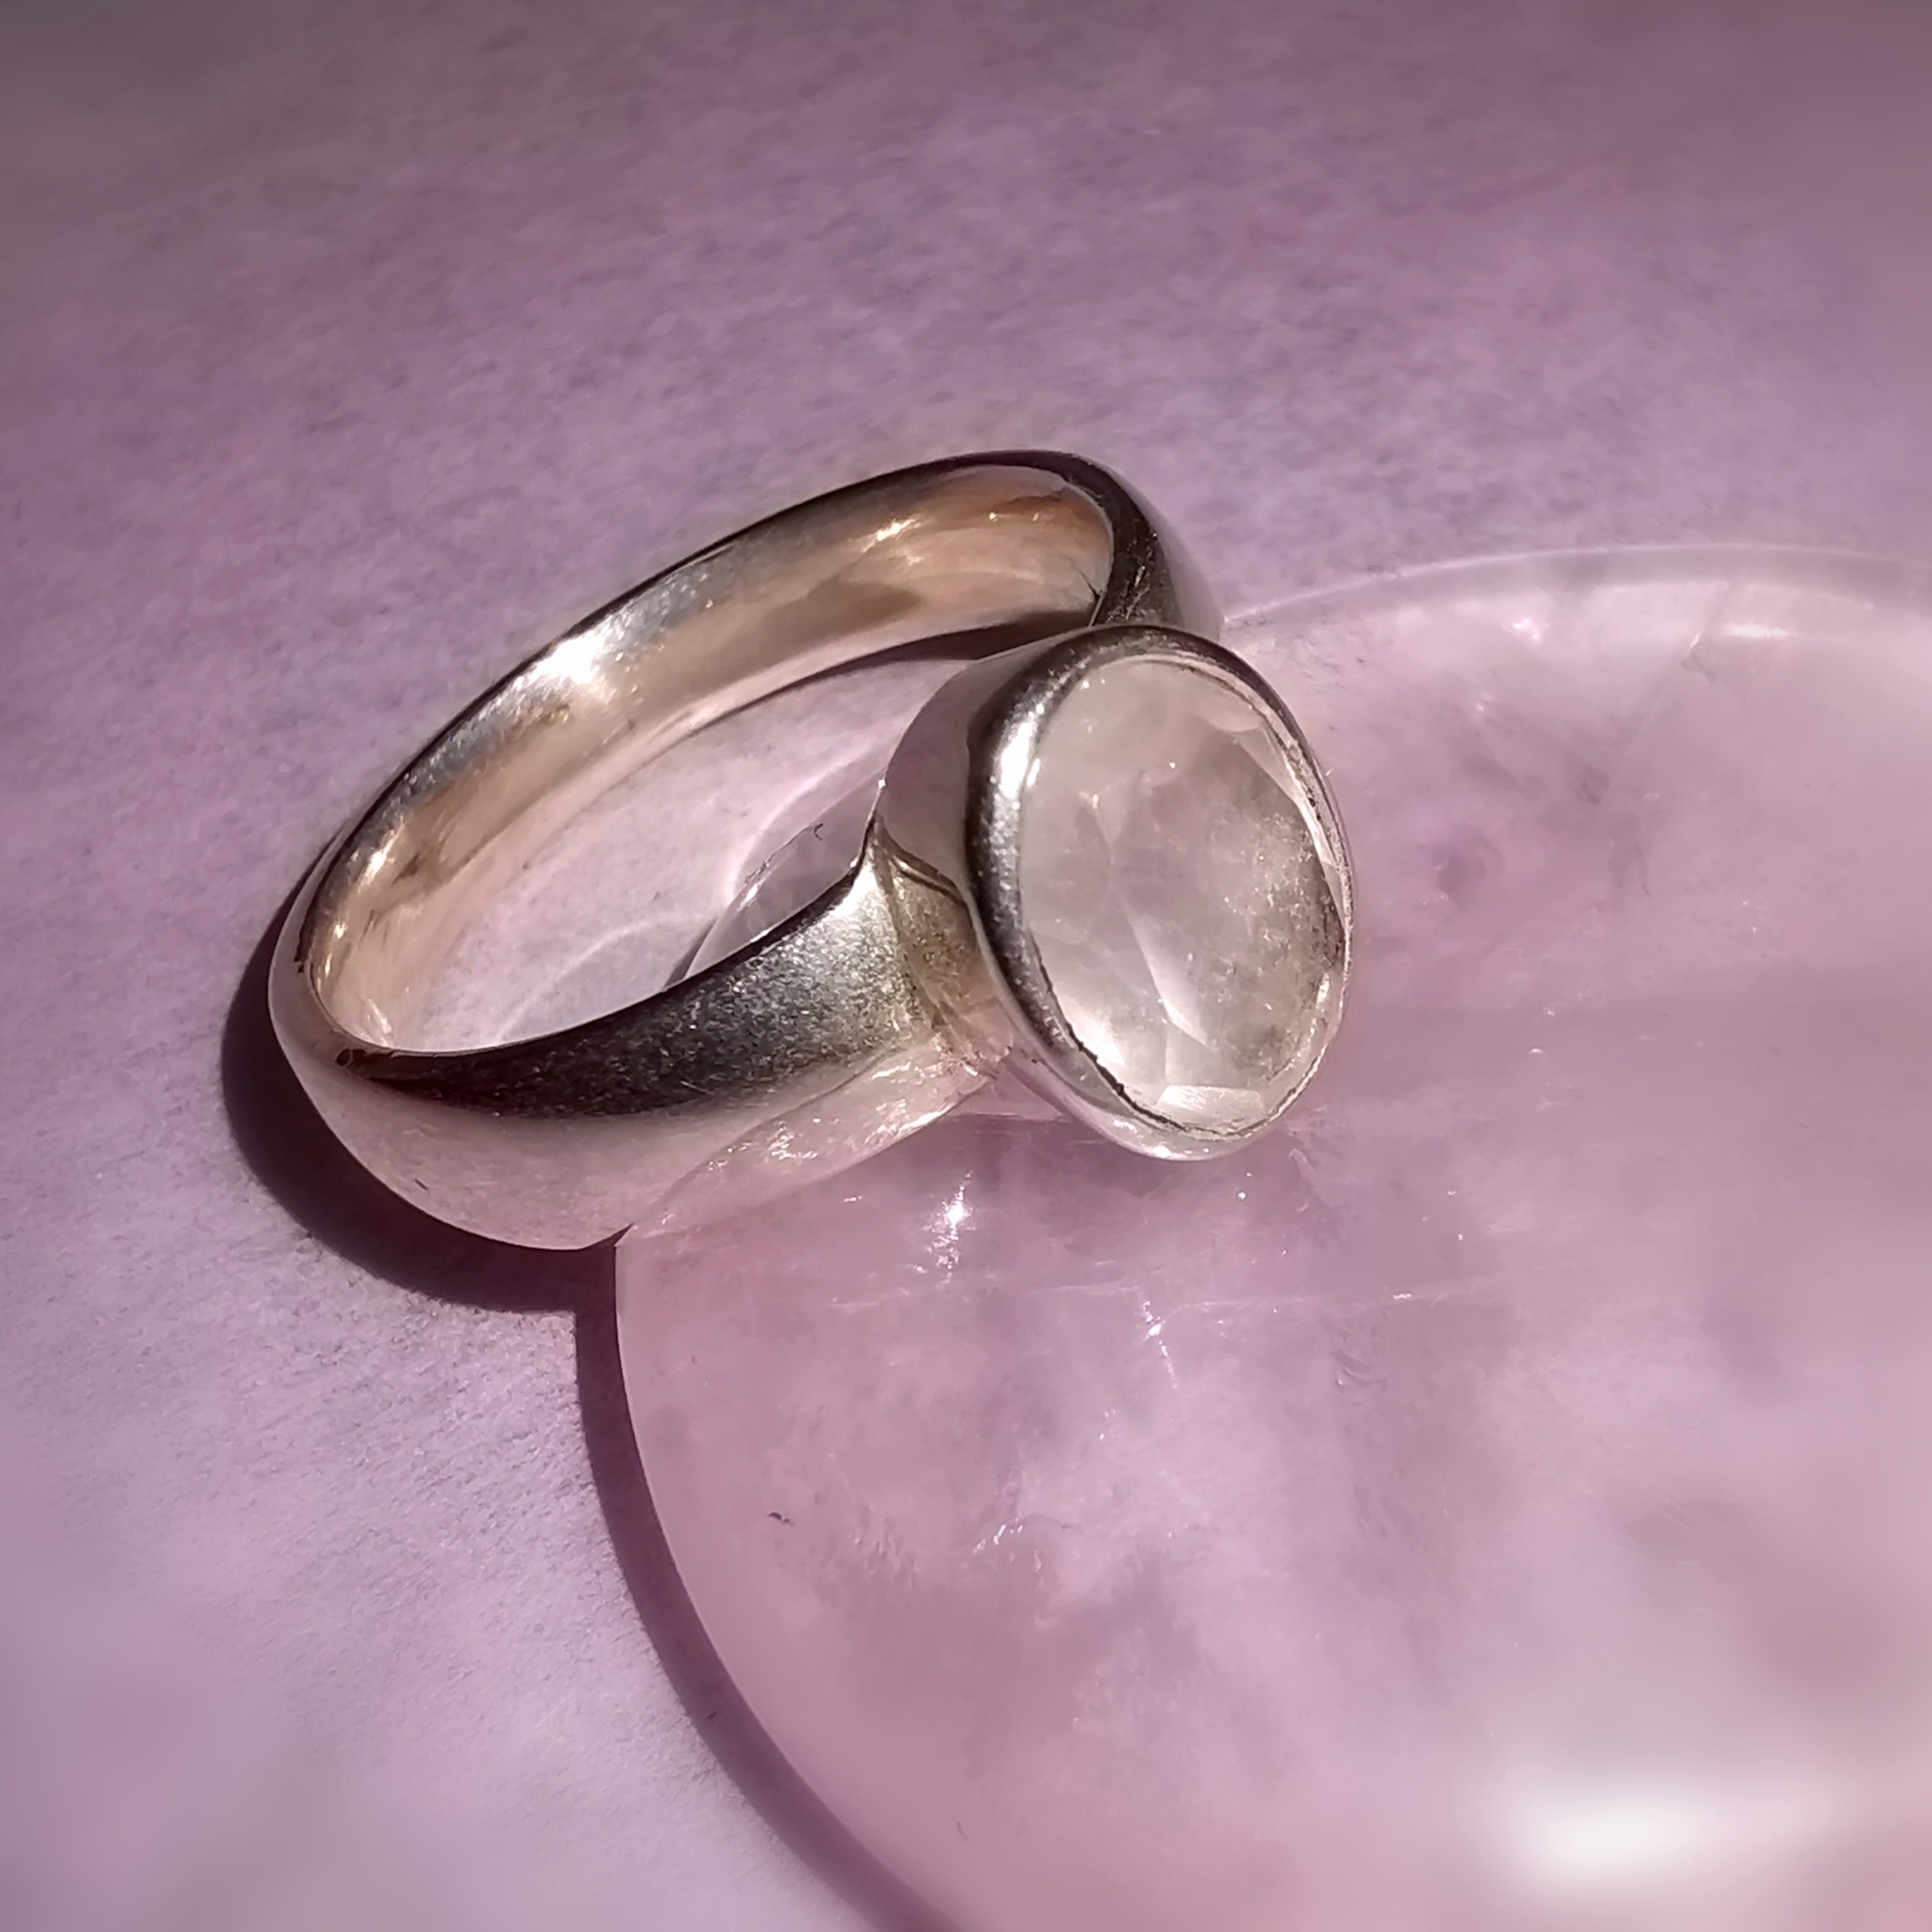 Rosenquarz AA Qualität Edelstein Sterlingsilber Ring Karma Herzchakra Fingerring Größe 54, facettiert, lichtvoll